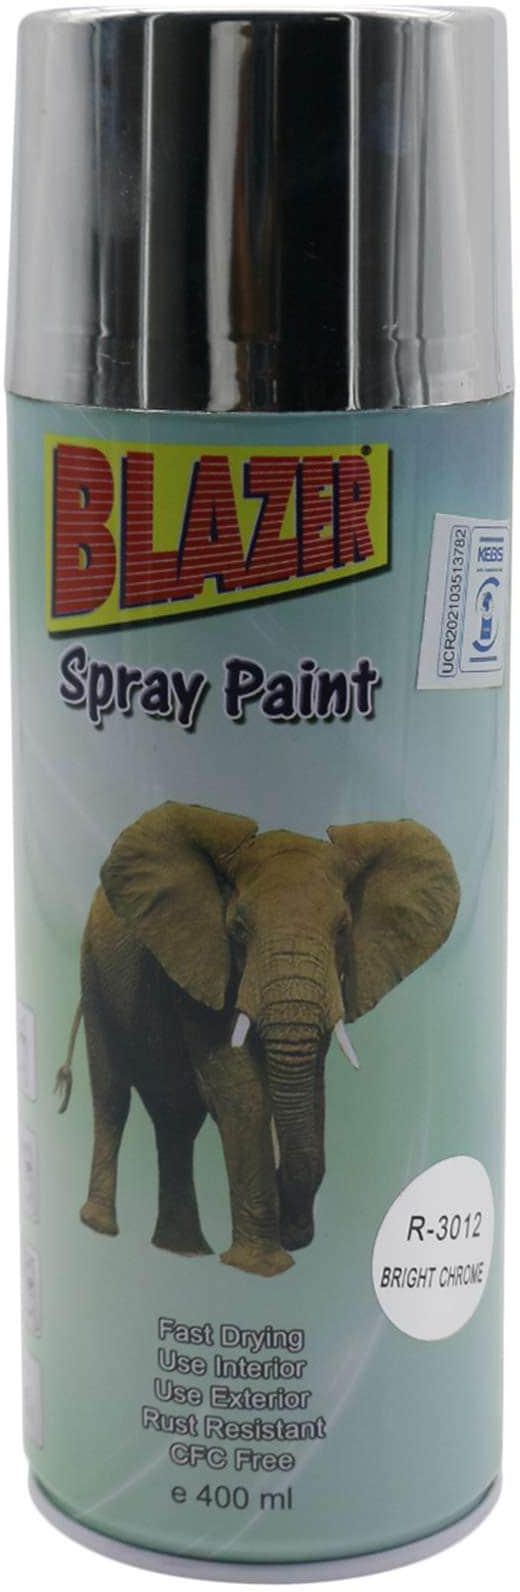 Blazer R-3012 Anti Rust Spray Paint 400ml Bright Chrome